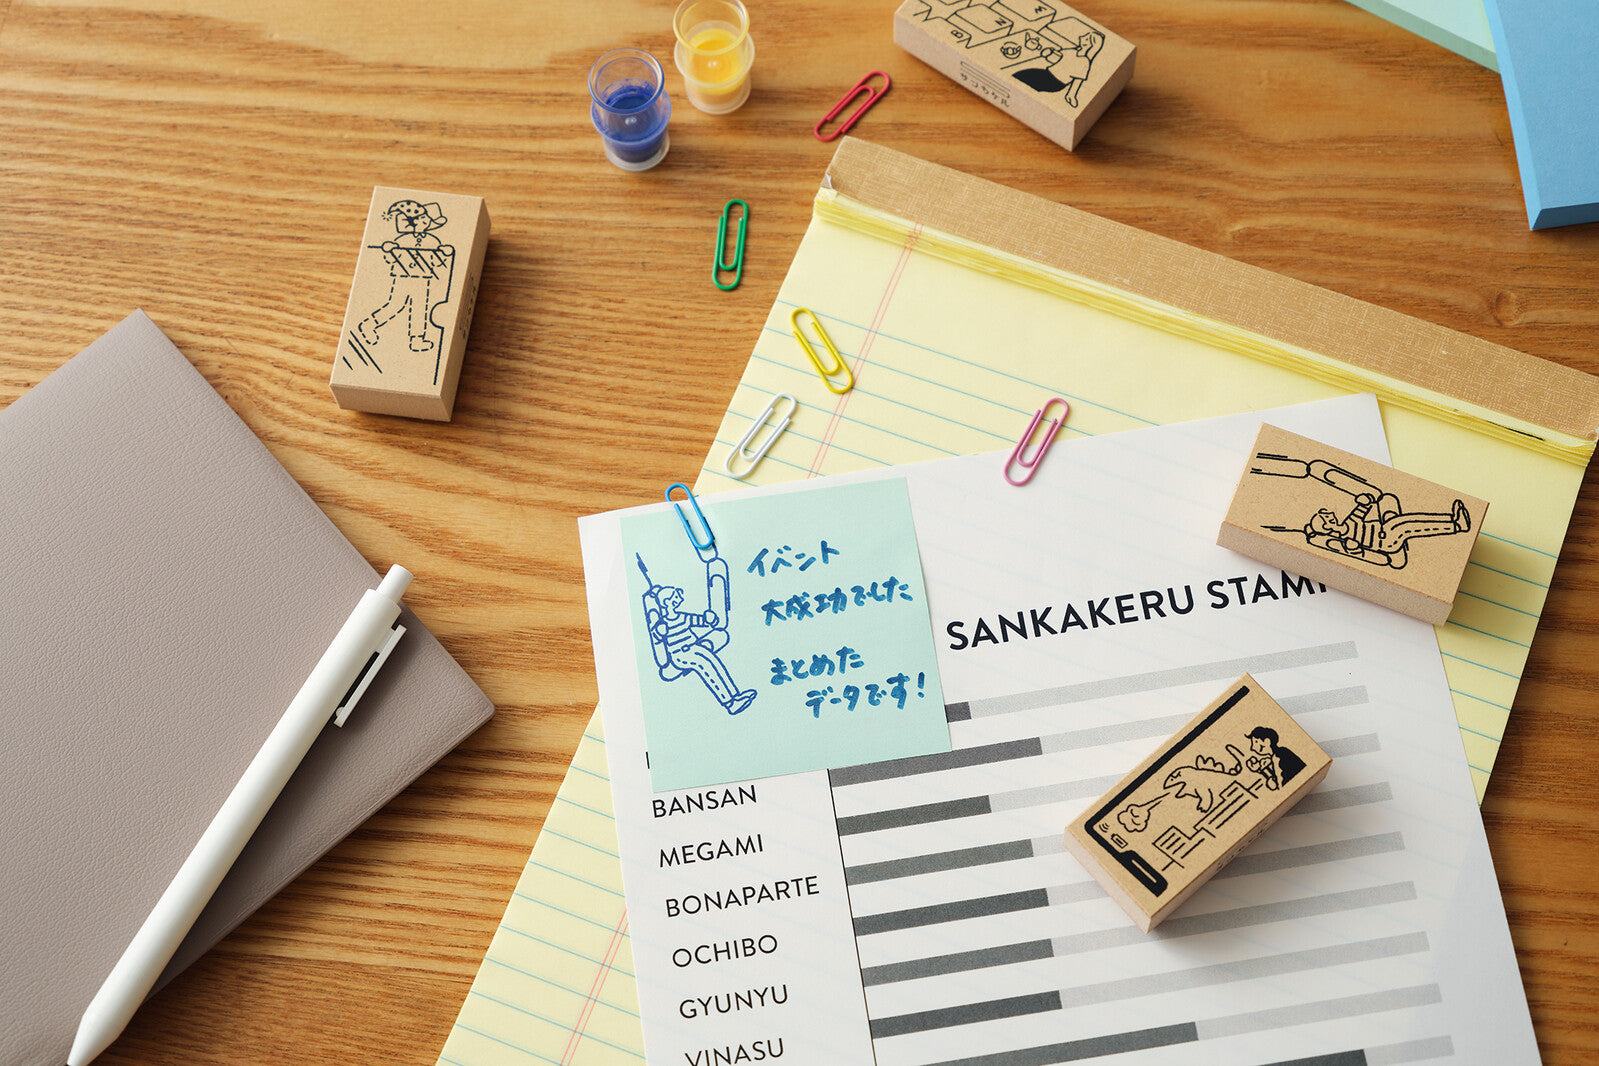 Sankakeru Office Life Rubber Stamp - Keyboard - Techo Treats